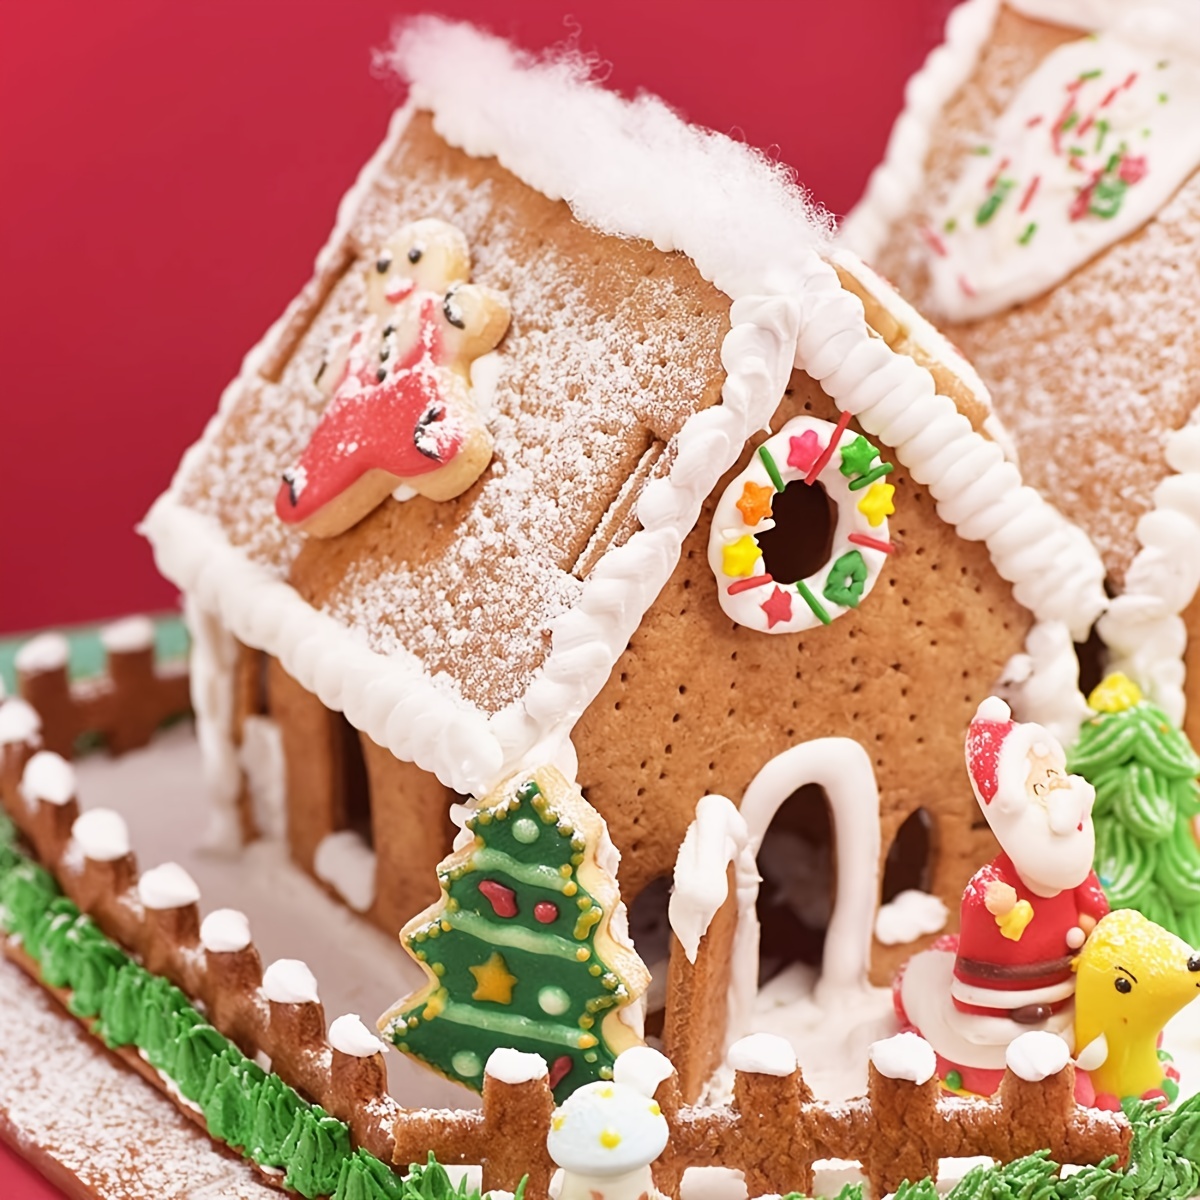 DIY Gingerbread Christmas House Kit